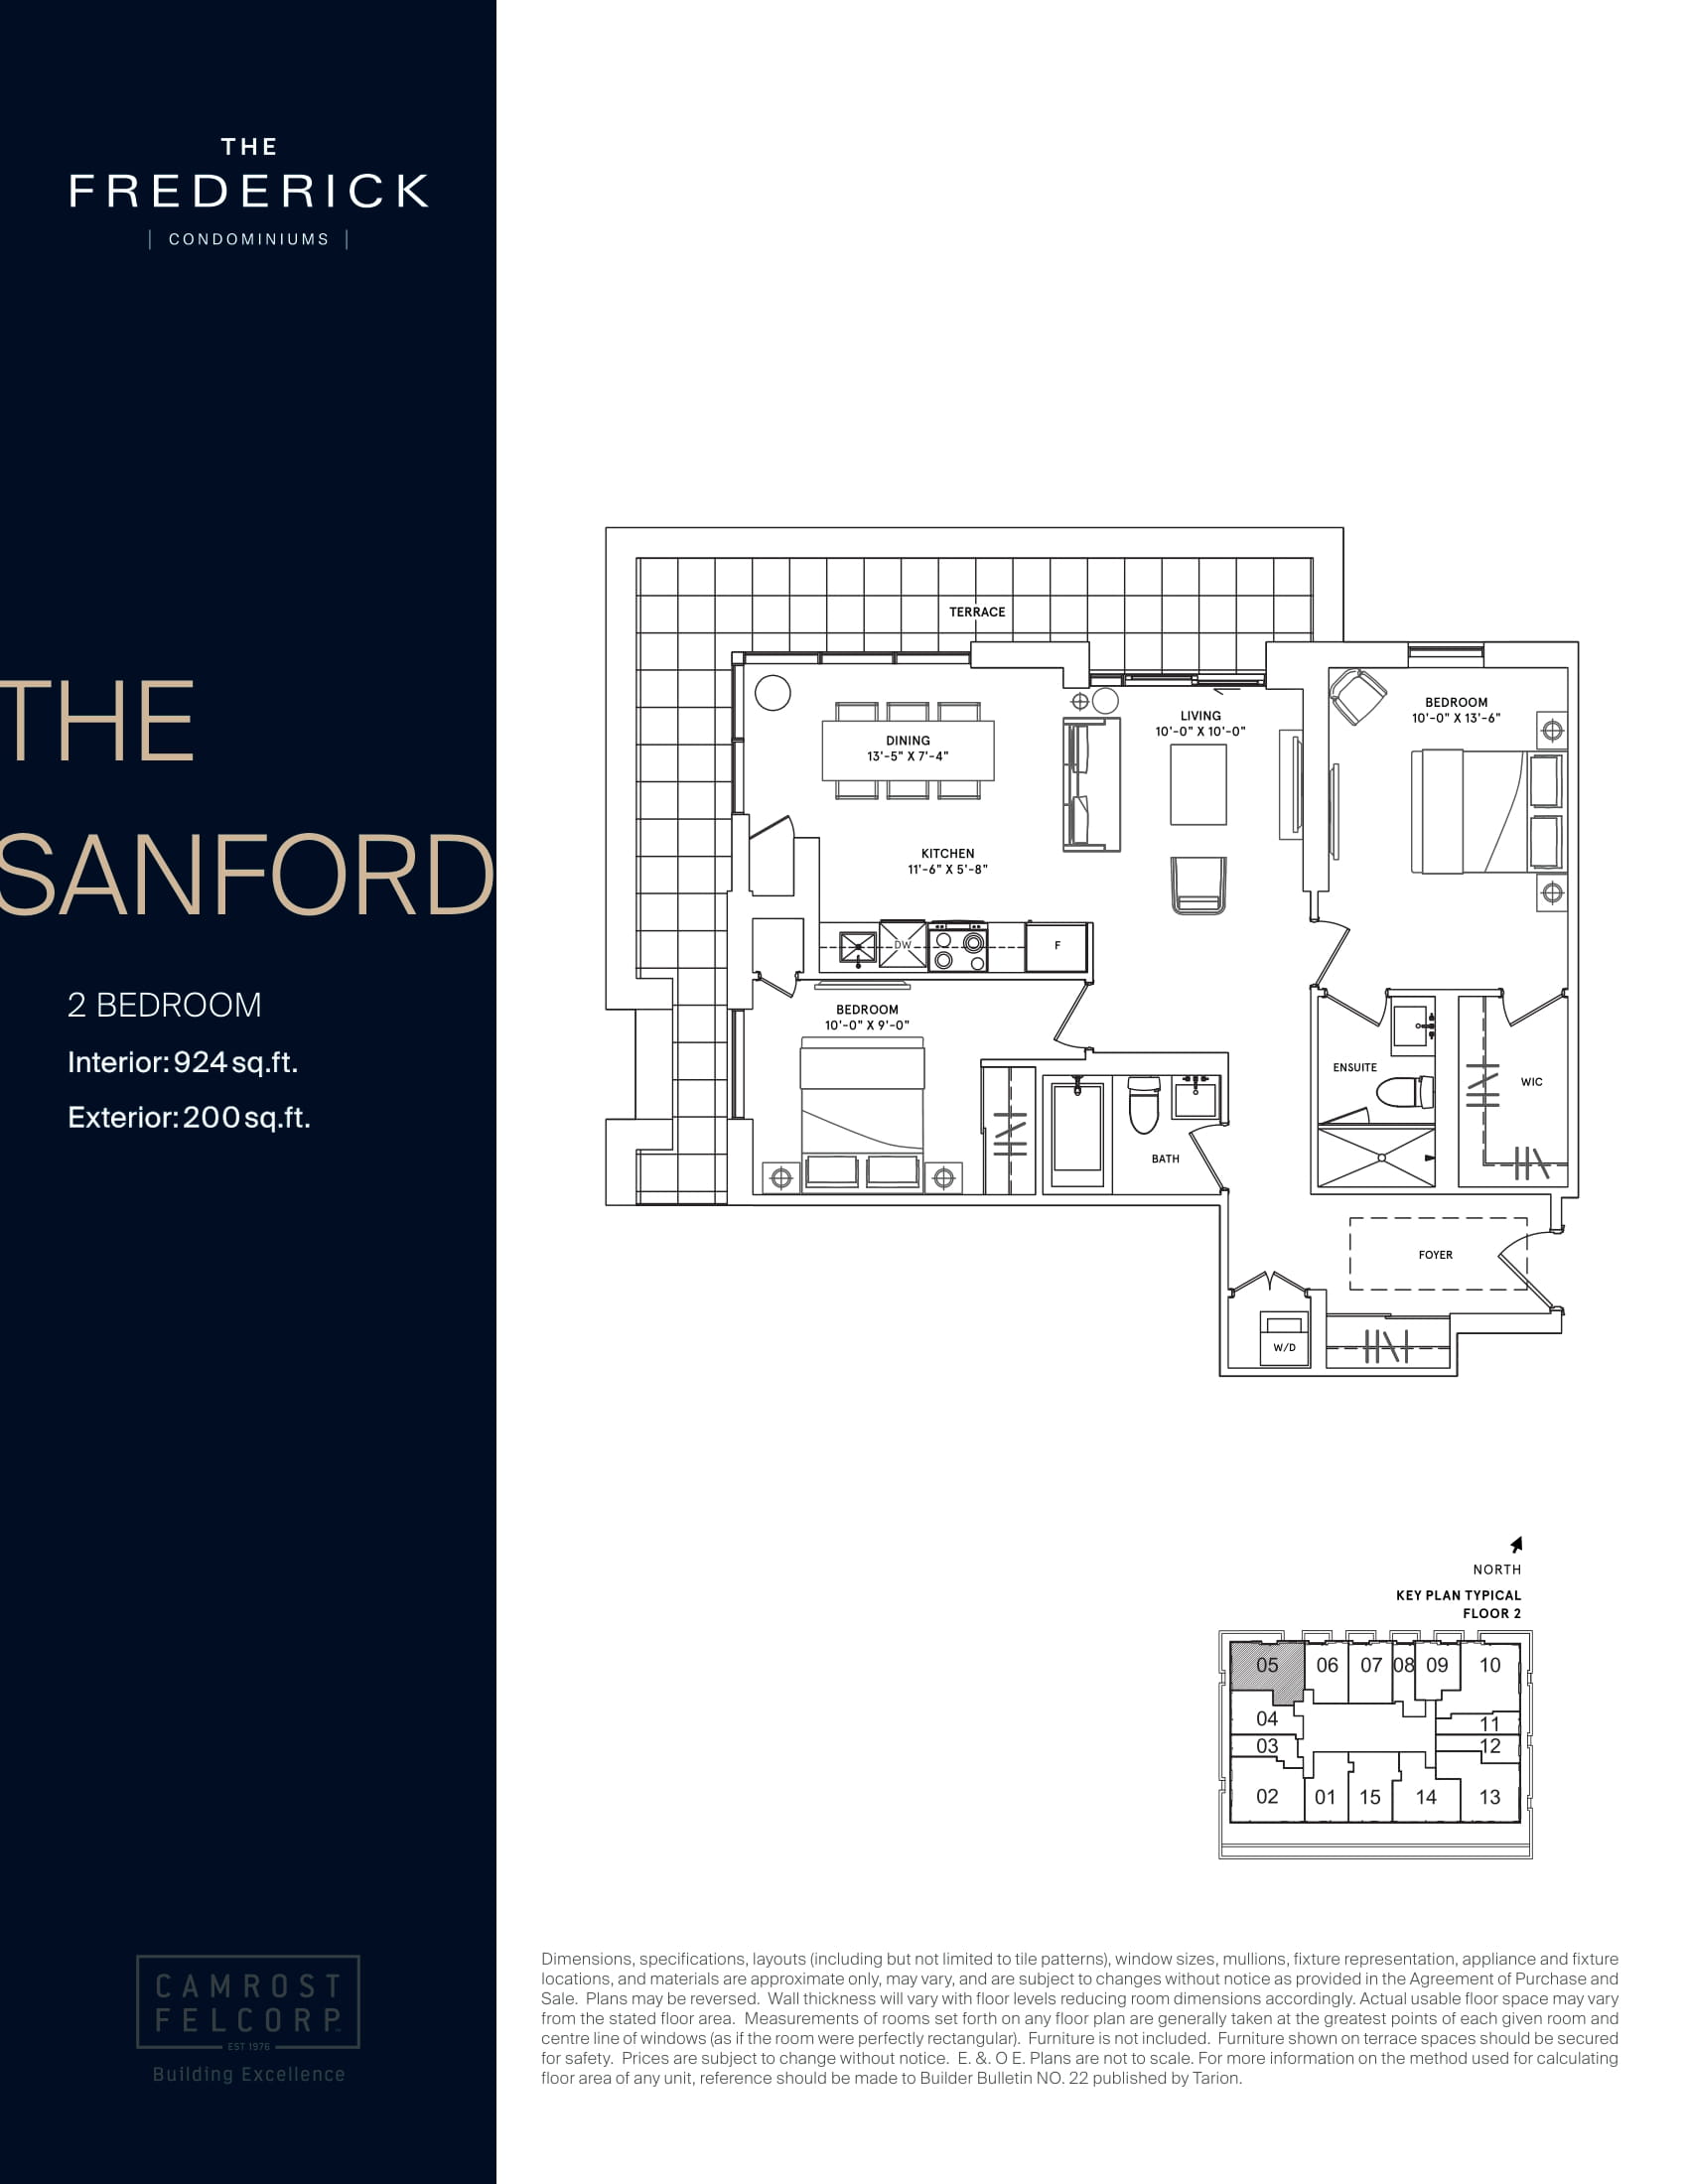 The Sanford